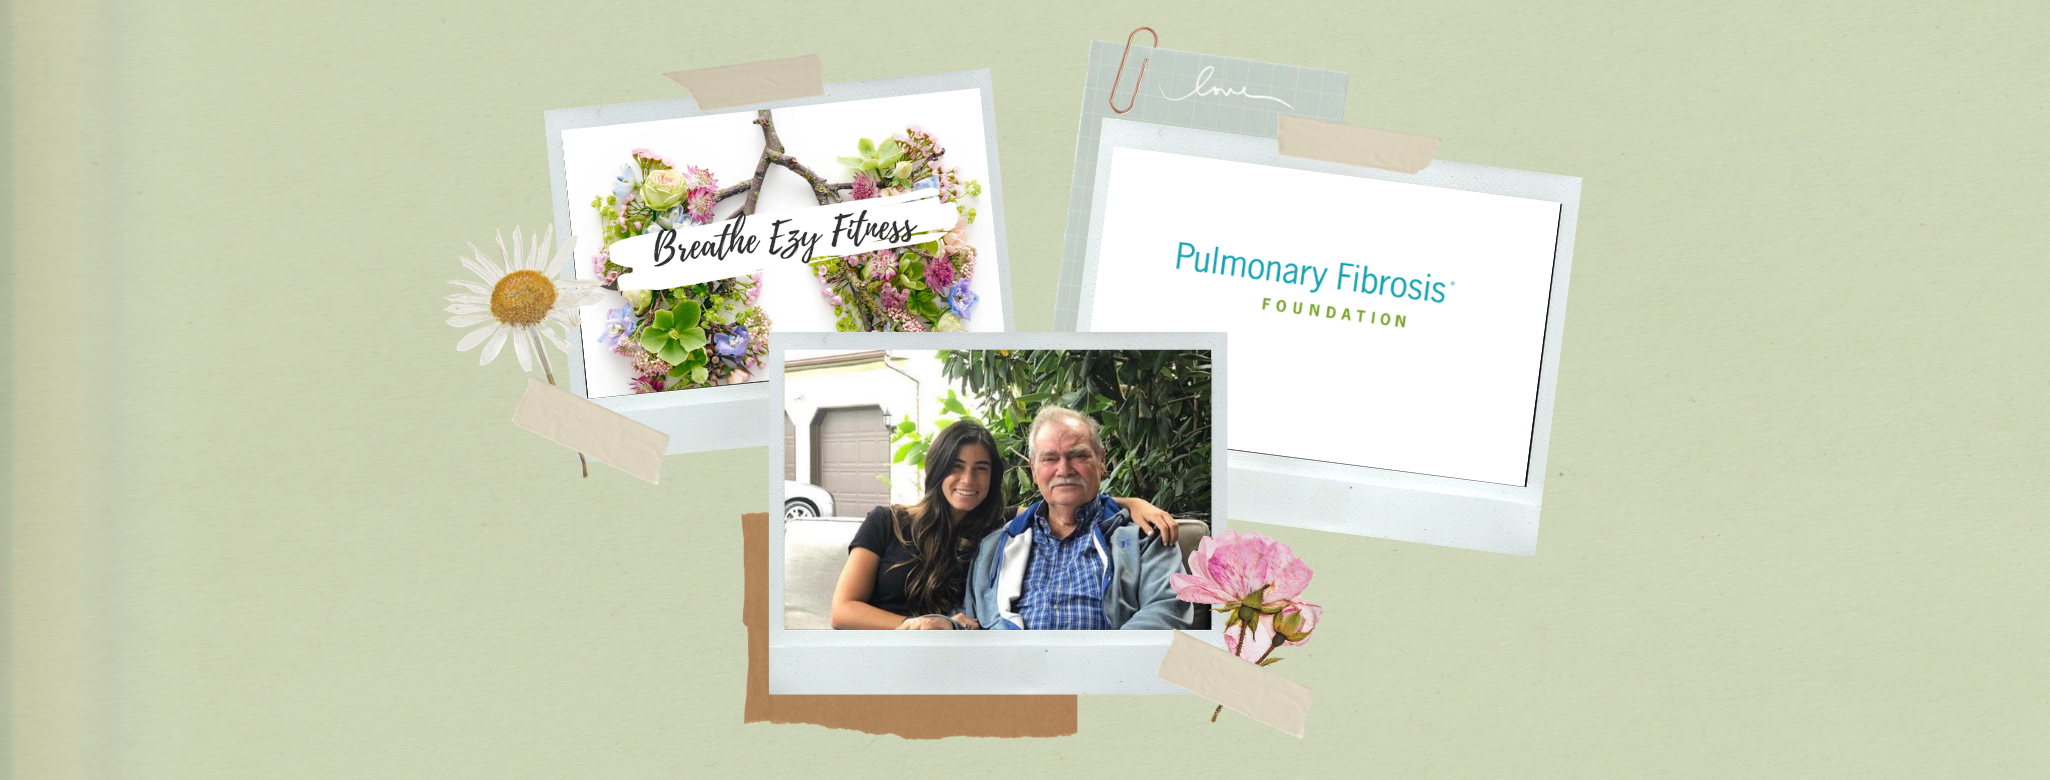 Pulmonary Fibrosis Foundation